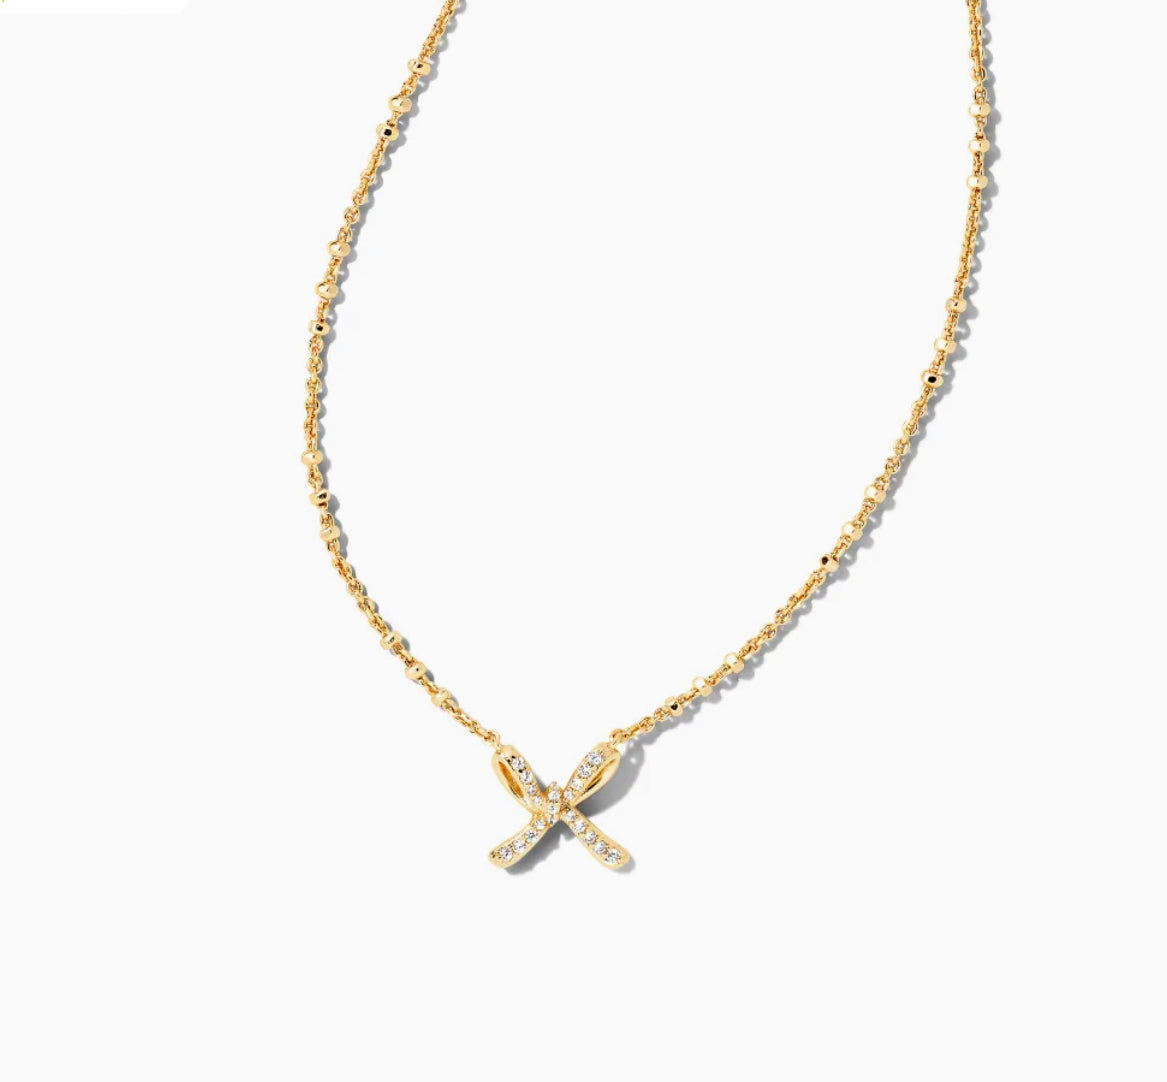 Kendra Scott Open Heart Pendant Necklace in 14k Yellow Gold | The Summit